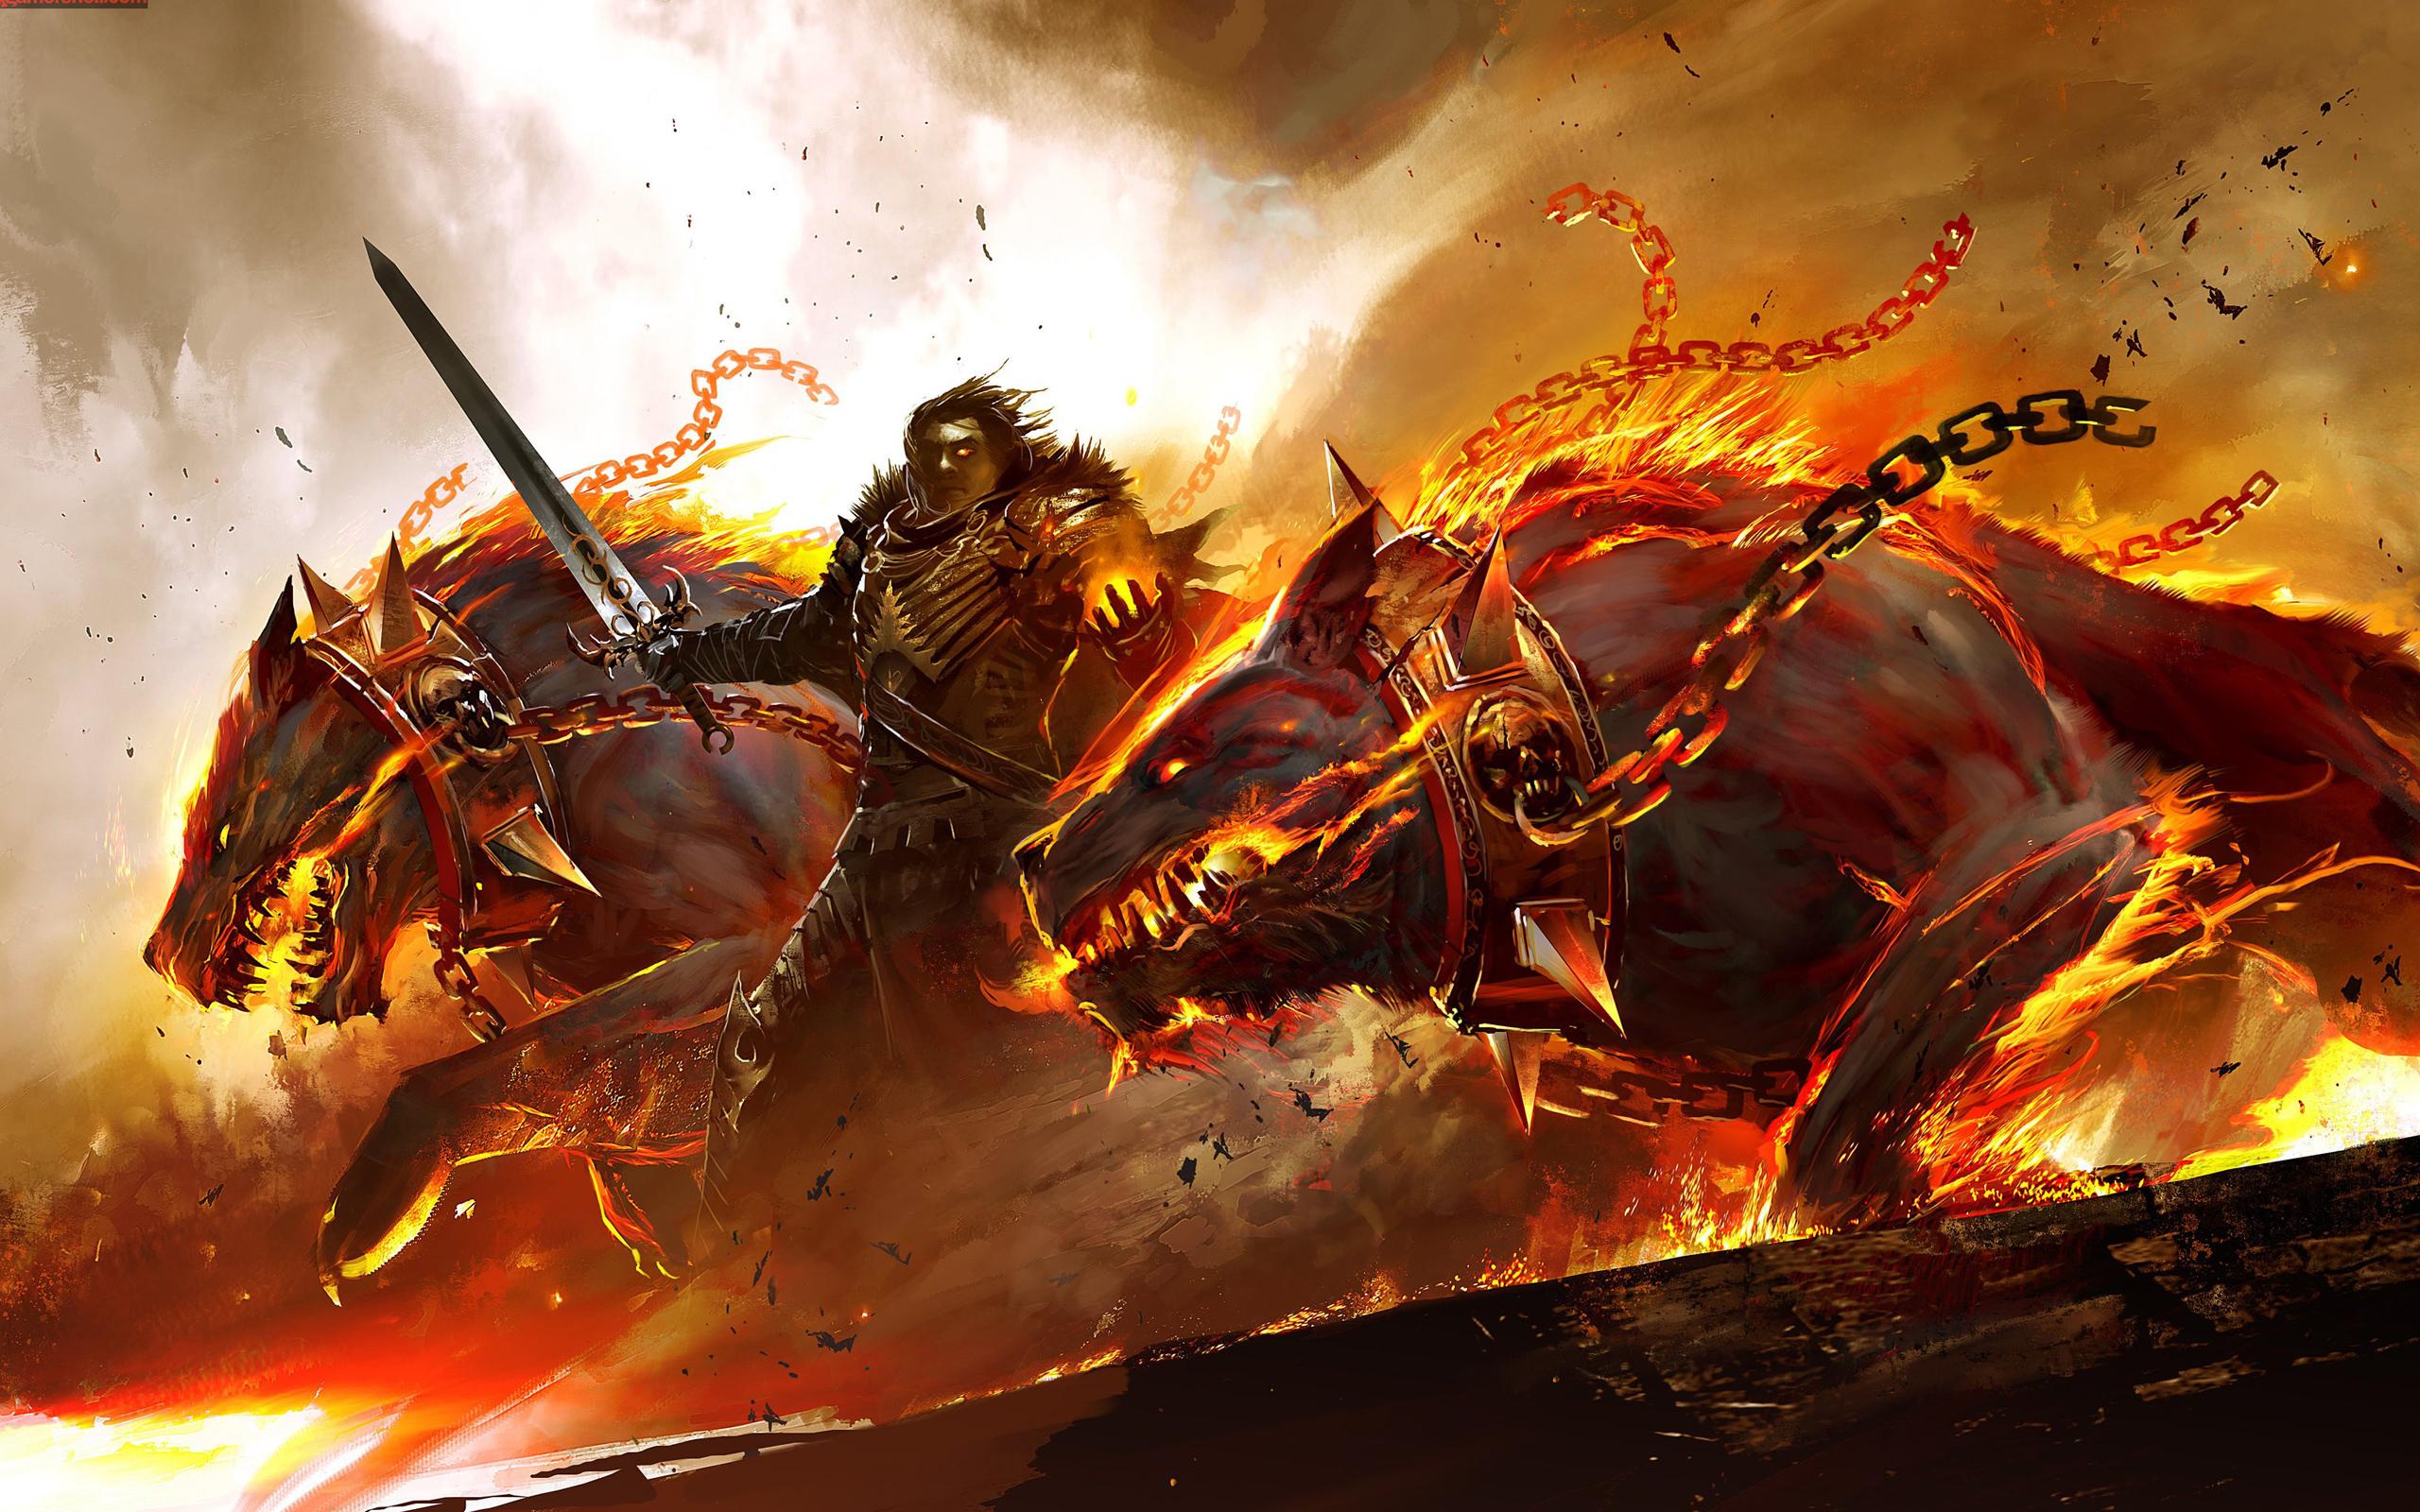 Guild Wars Factions HD Wallpaper | Guild Wars Factions Image ...